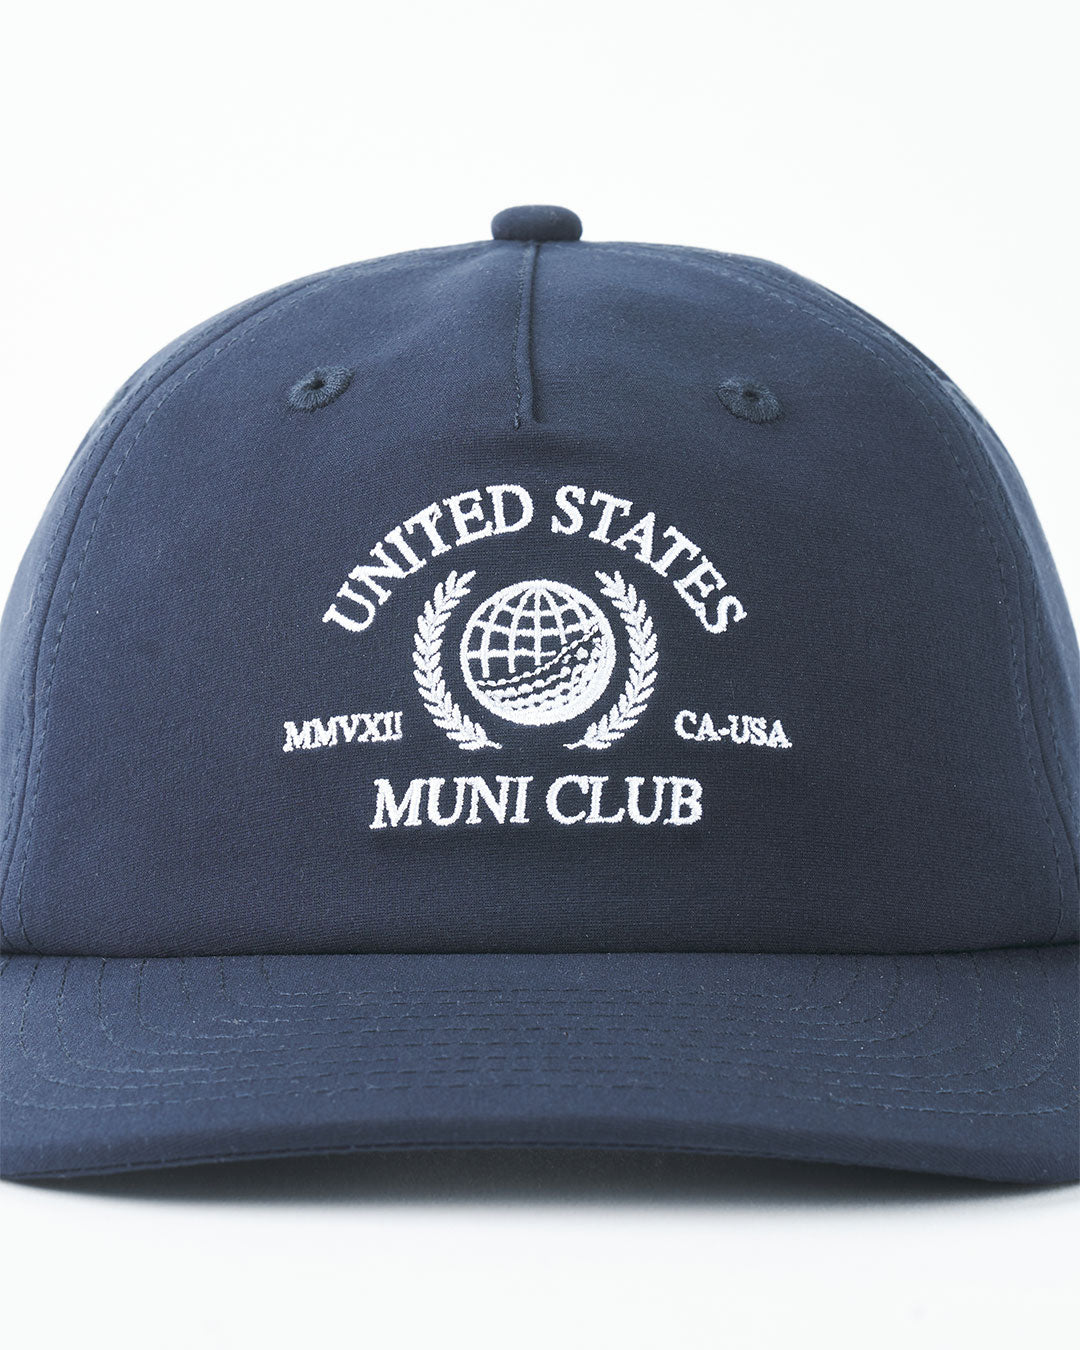 Palm Golf Co. United States Muni Club Snapback